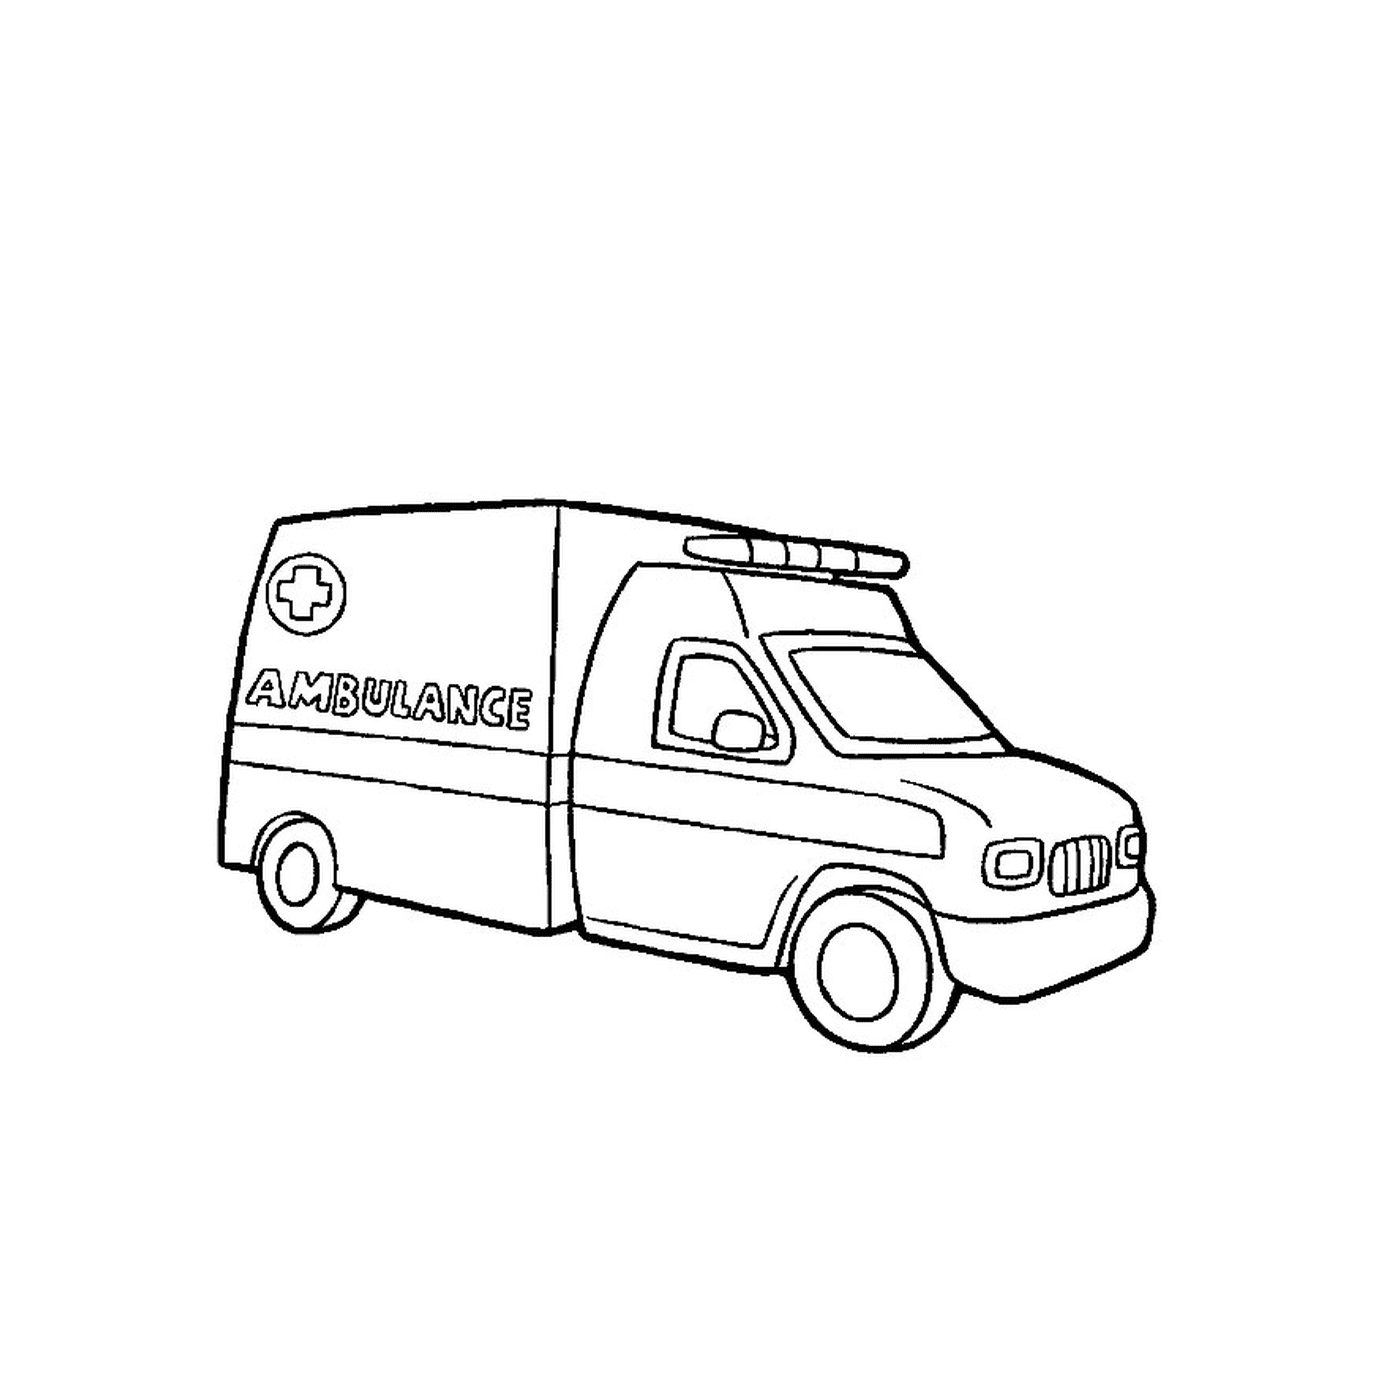  Dibujo de una ambulancia 